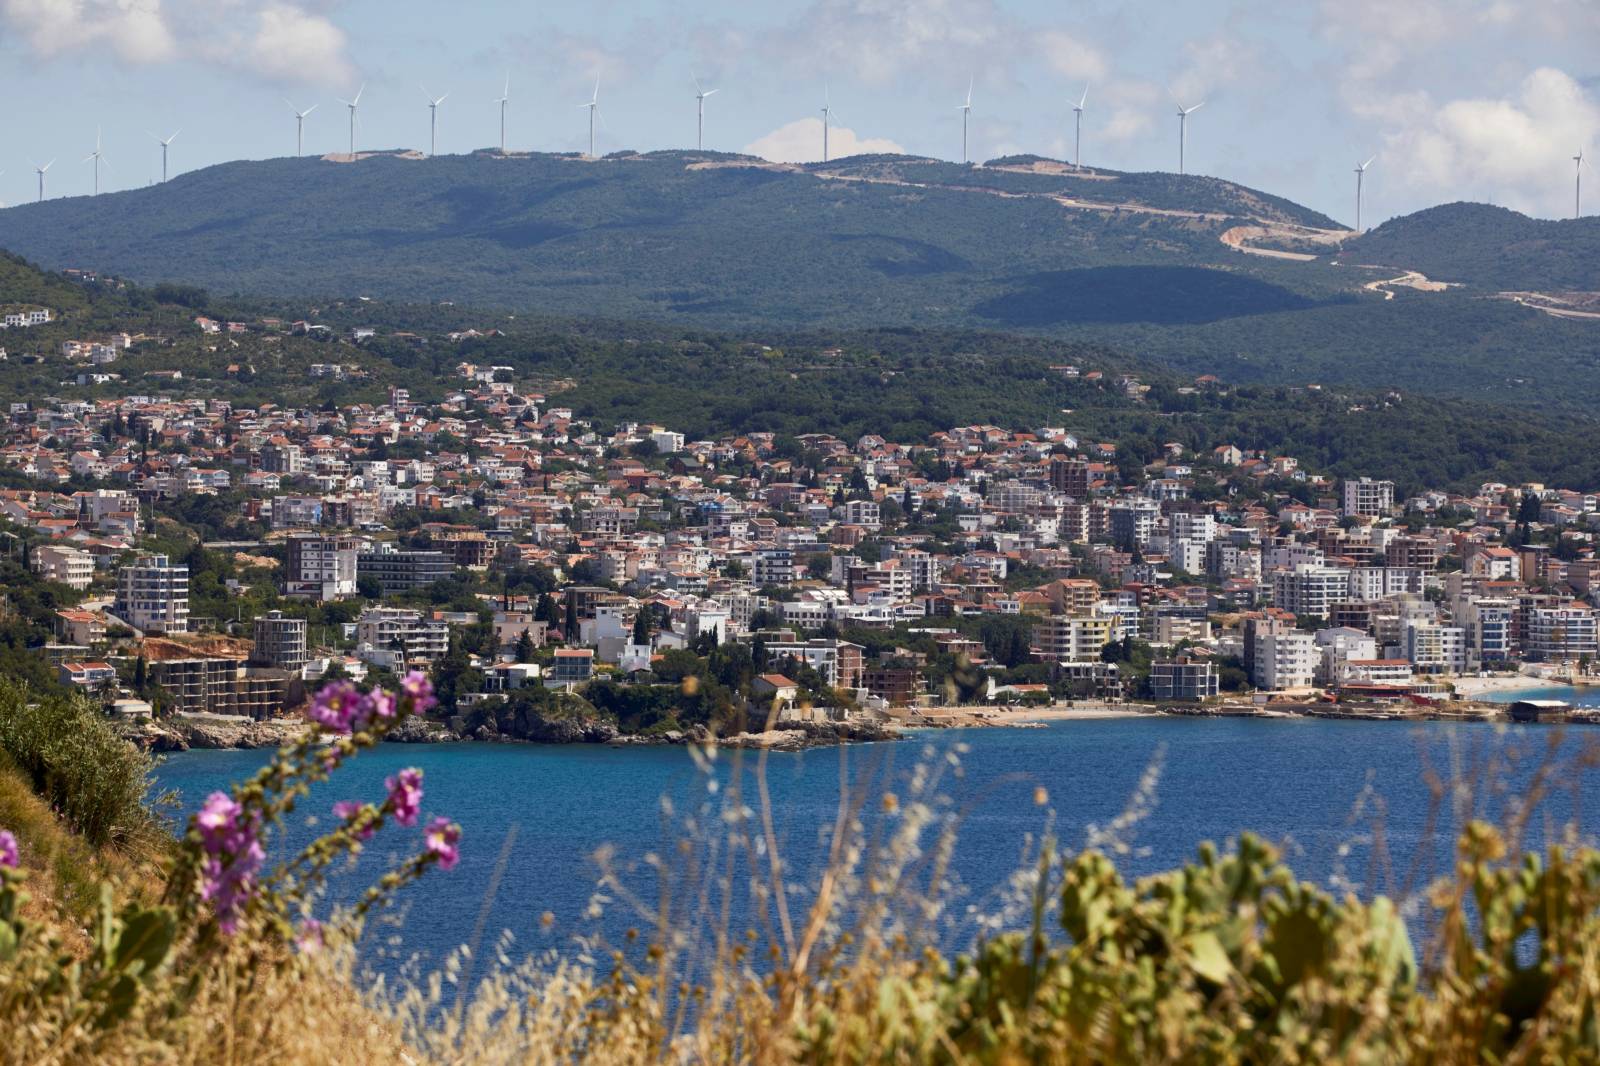 Wind turbines of the Mozura wind farm are seen on a hill in Ulcinj, Montenegro